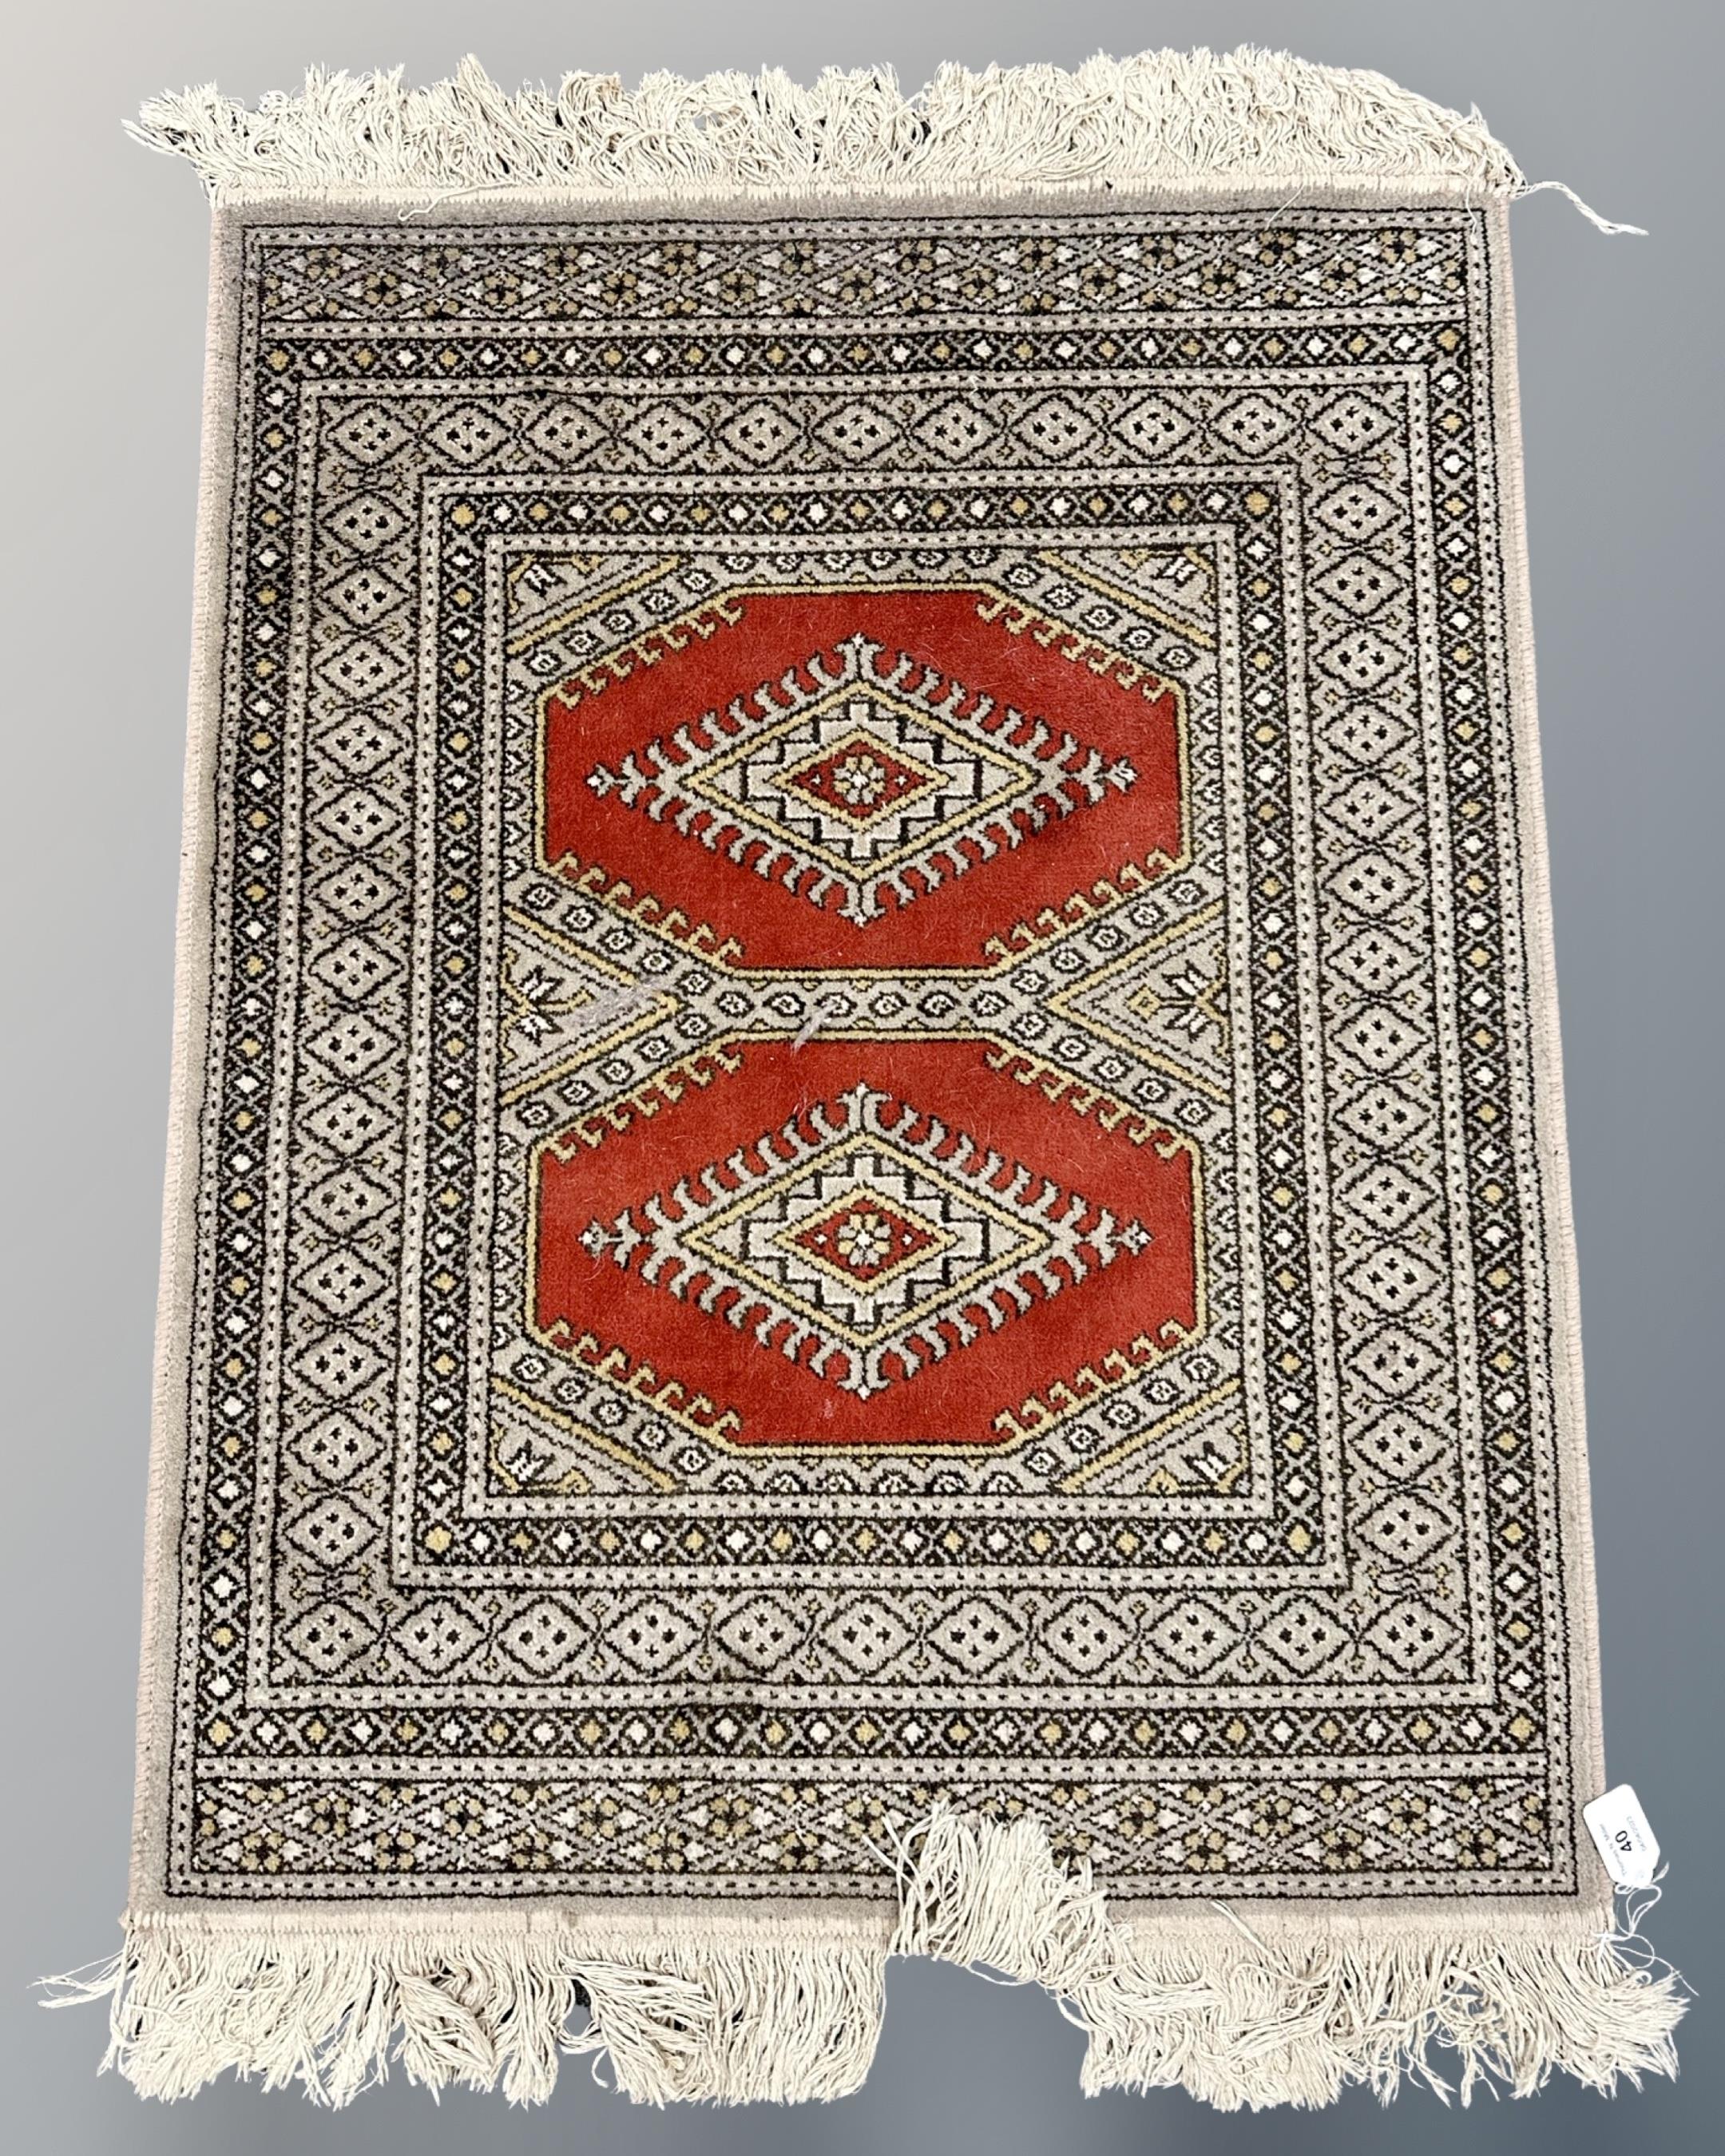 A Bokhara design rug, 72cm by 104cm.